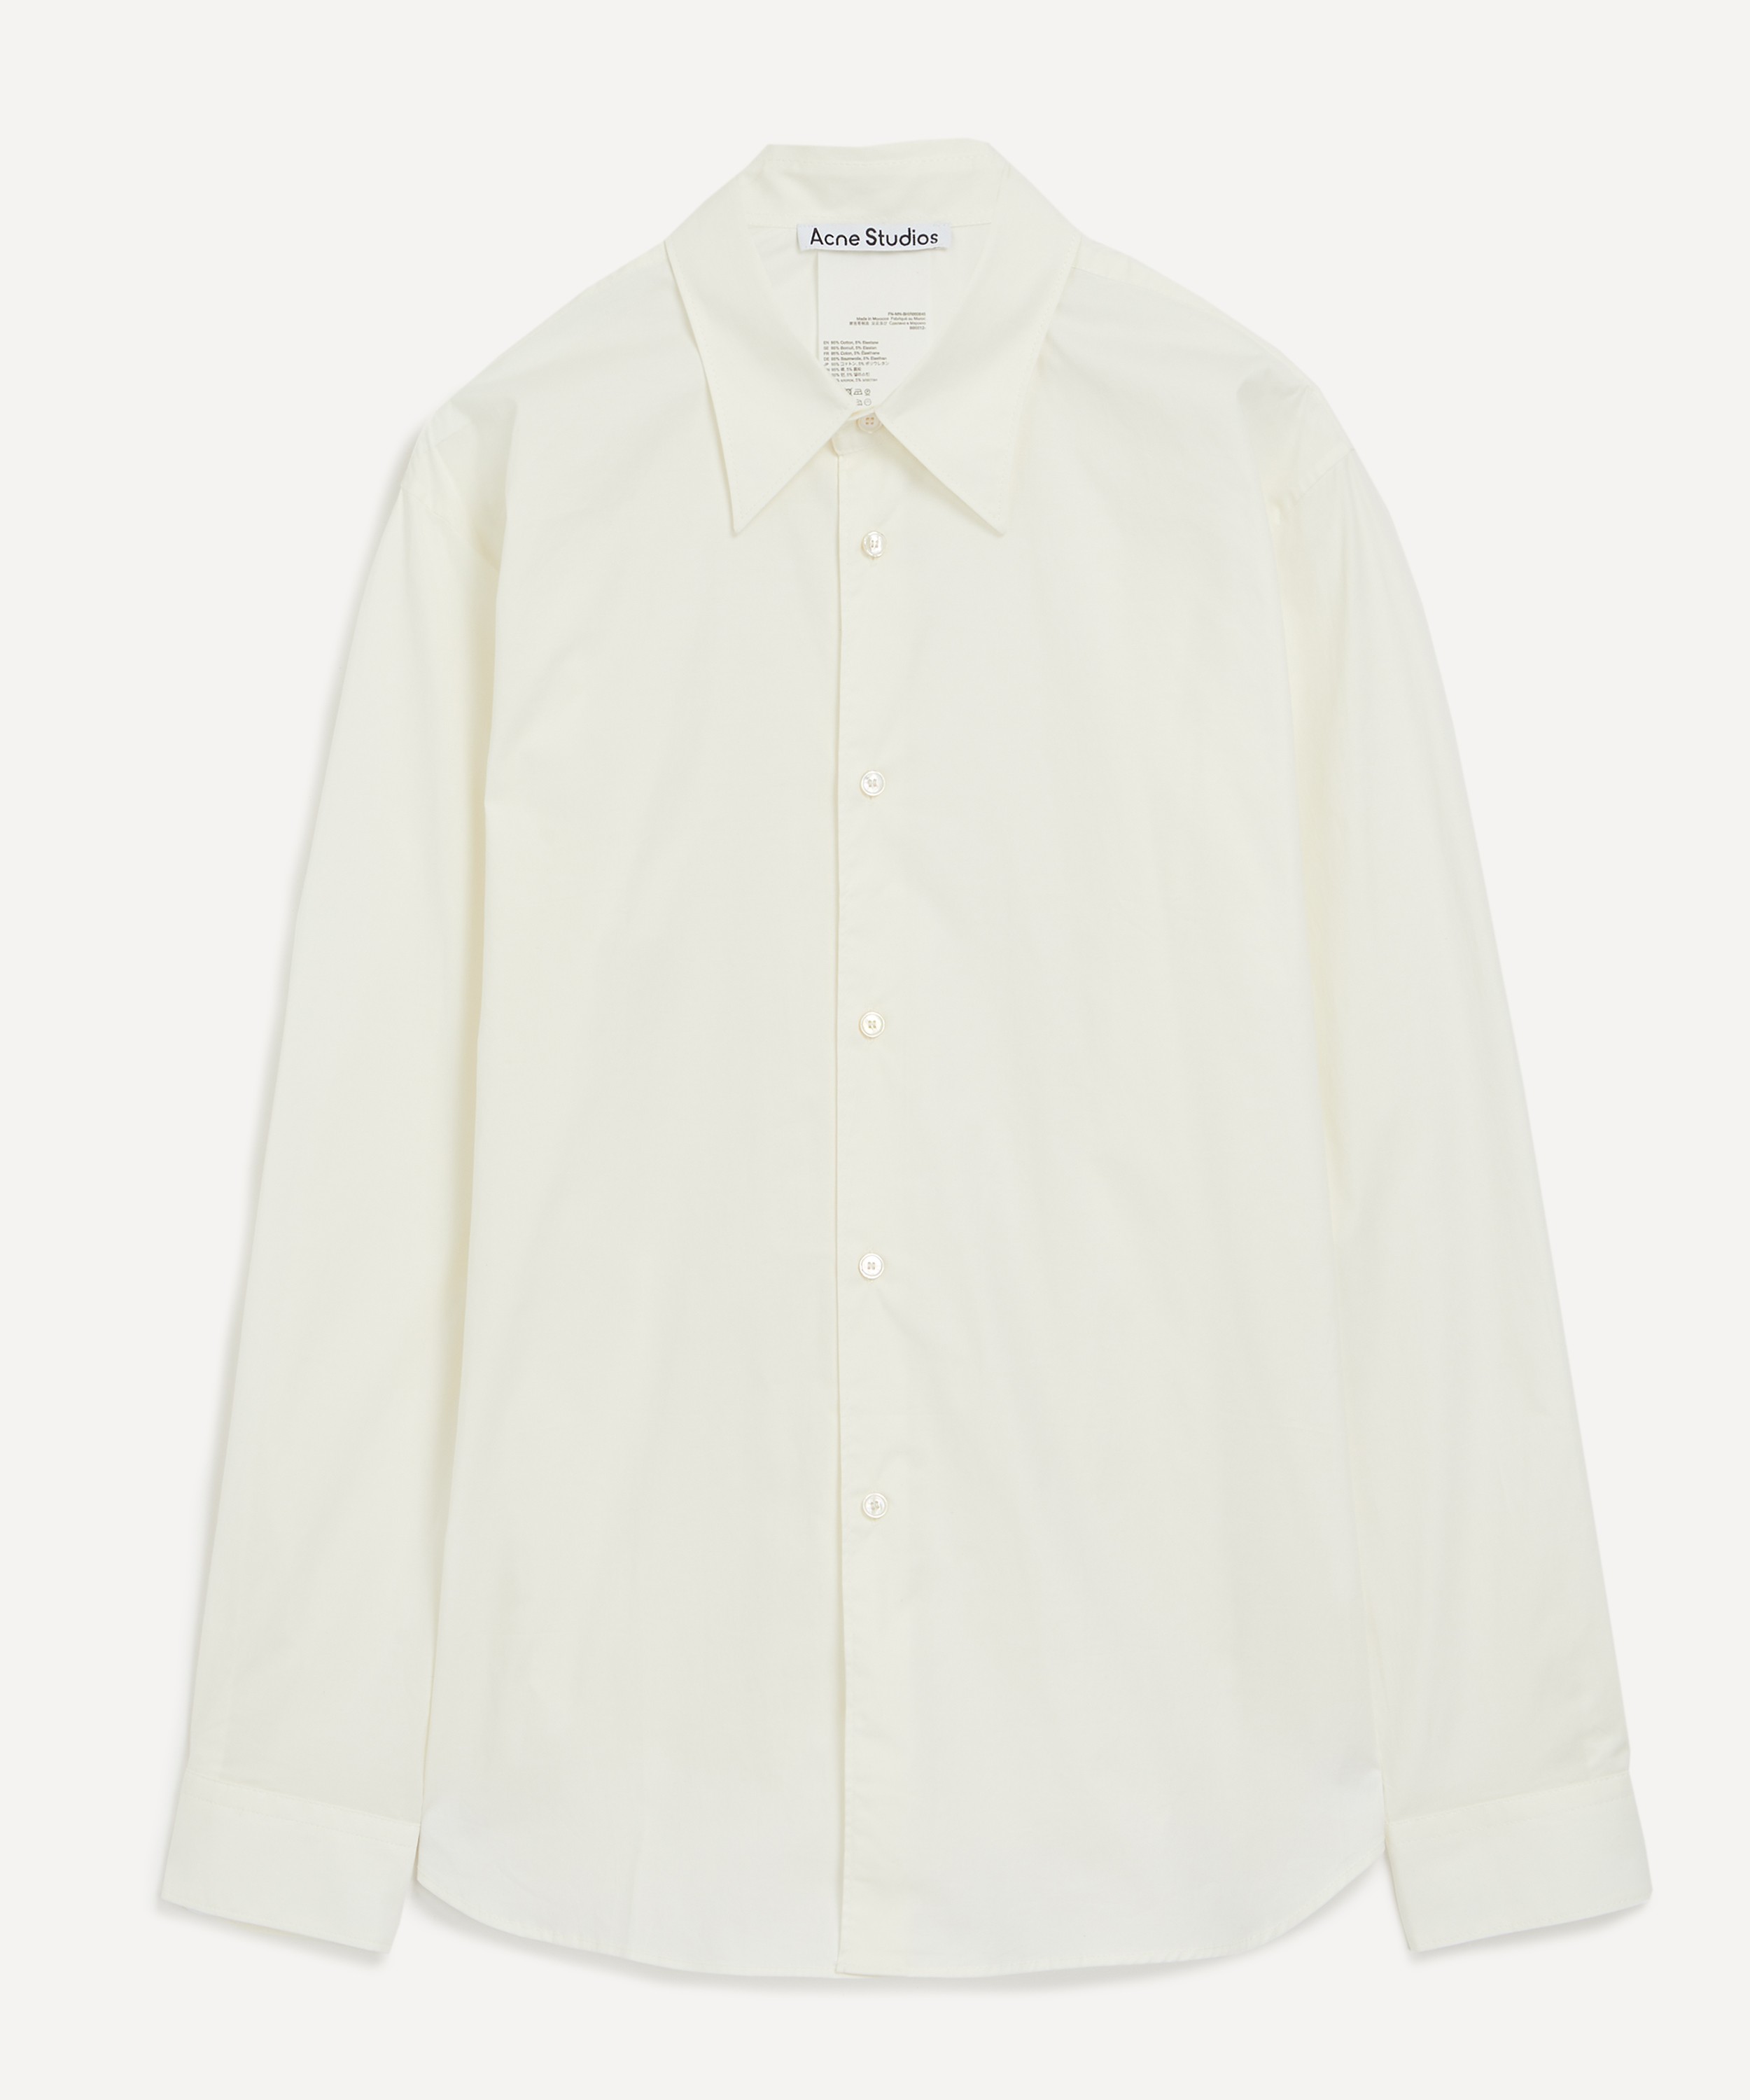 Acne Studios - Button-Up Shirt